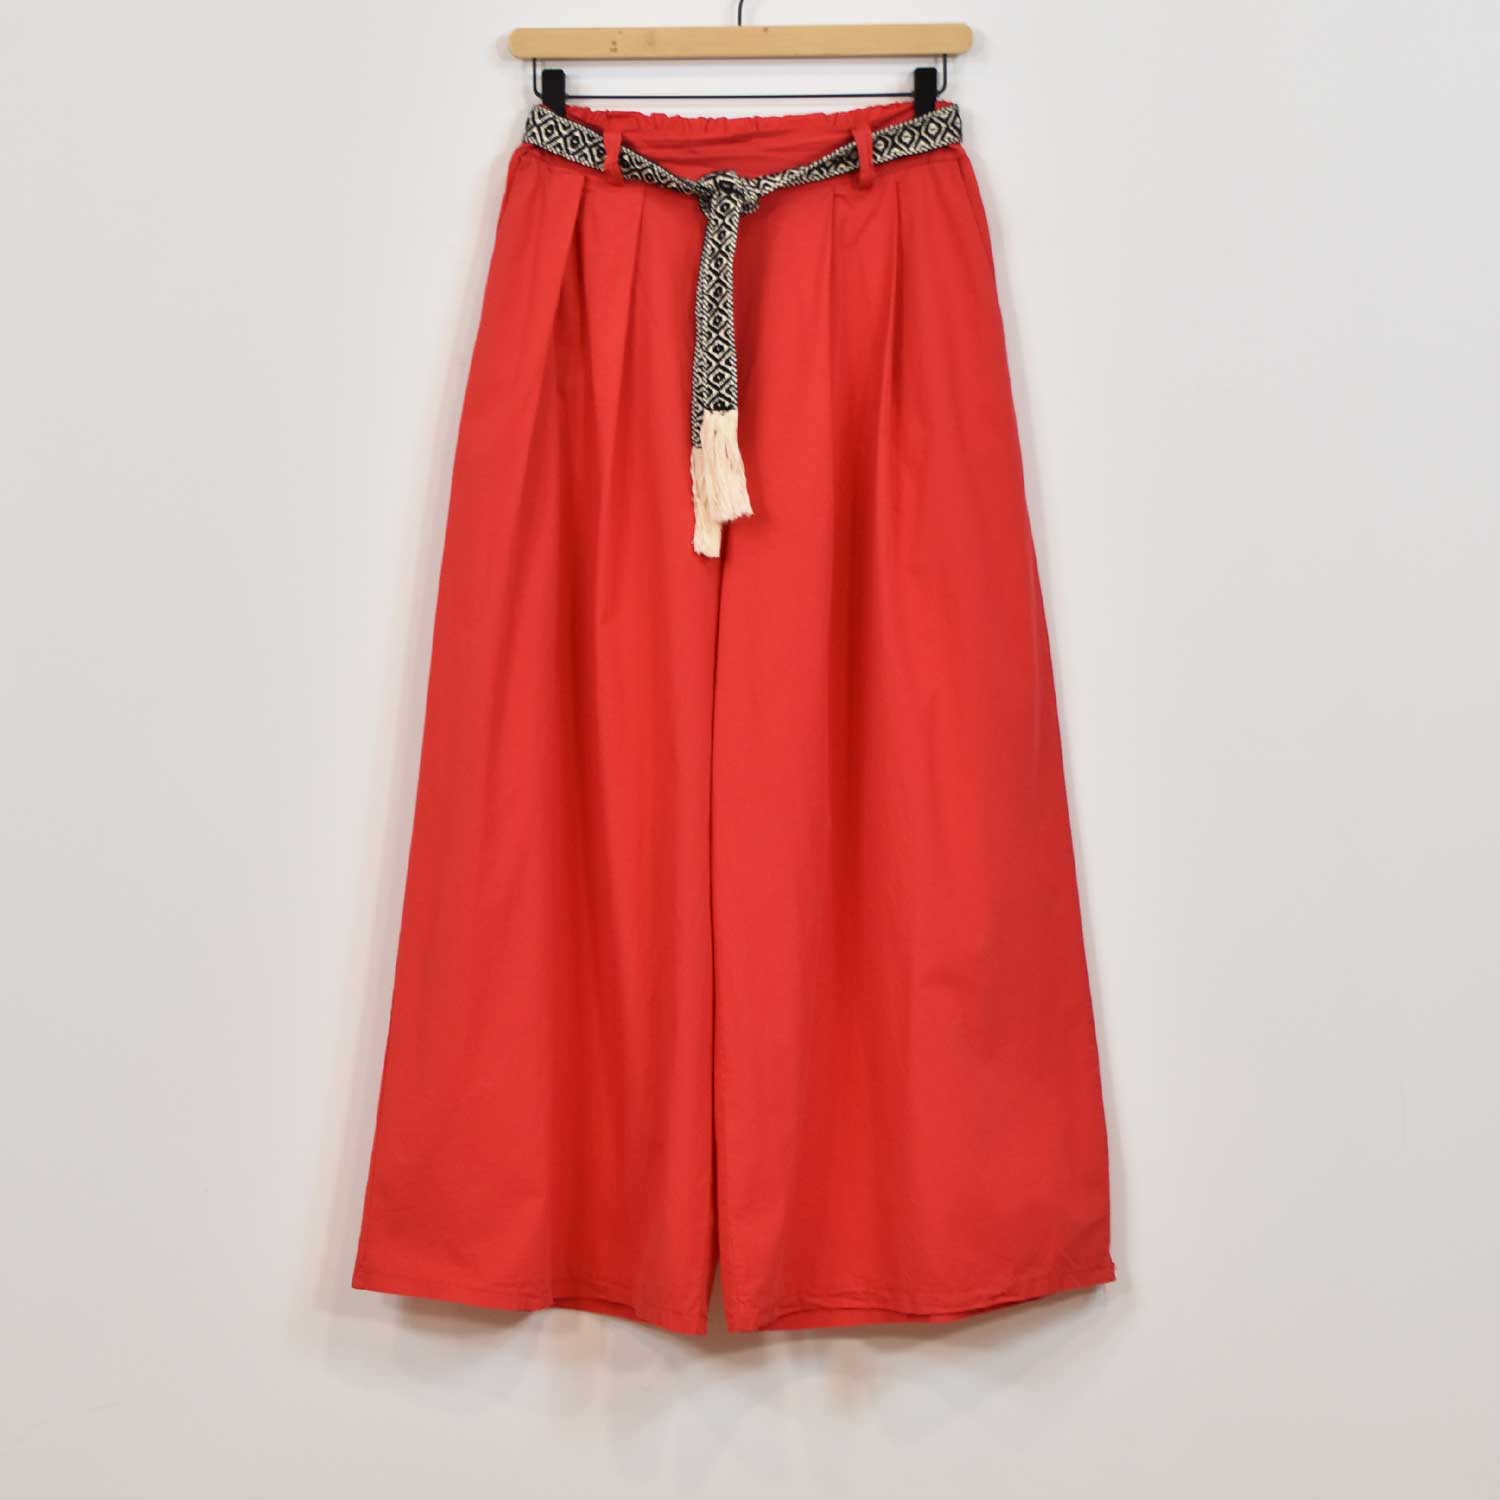 Red palazzo belt pants